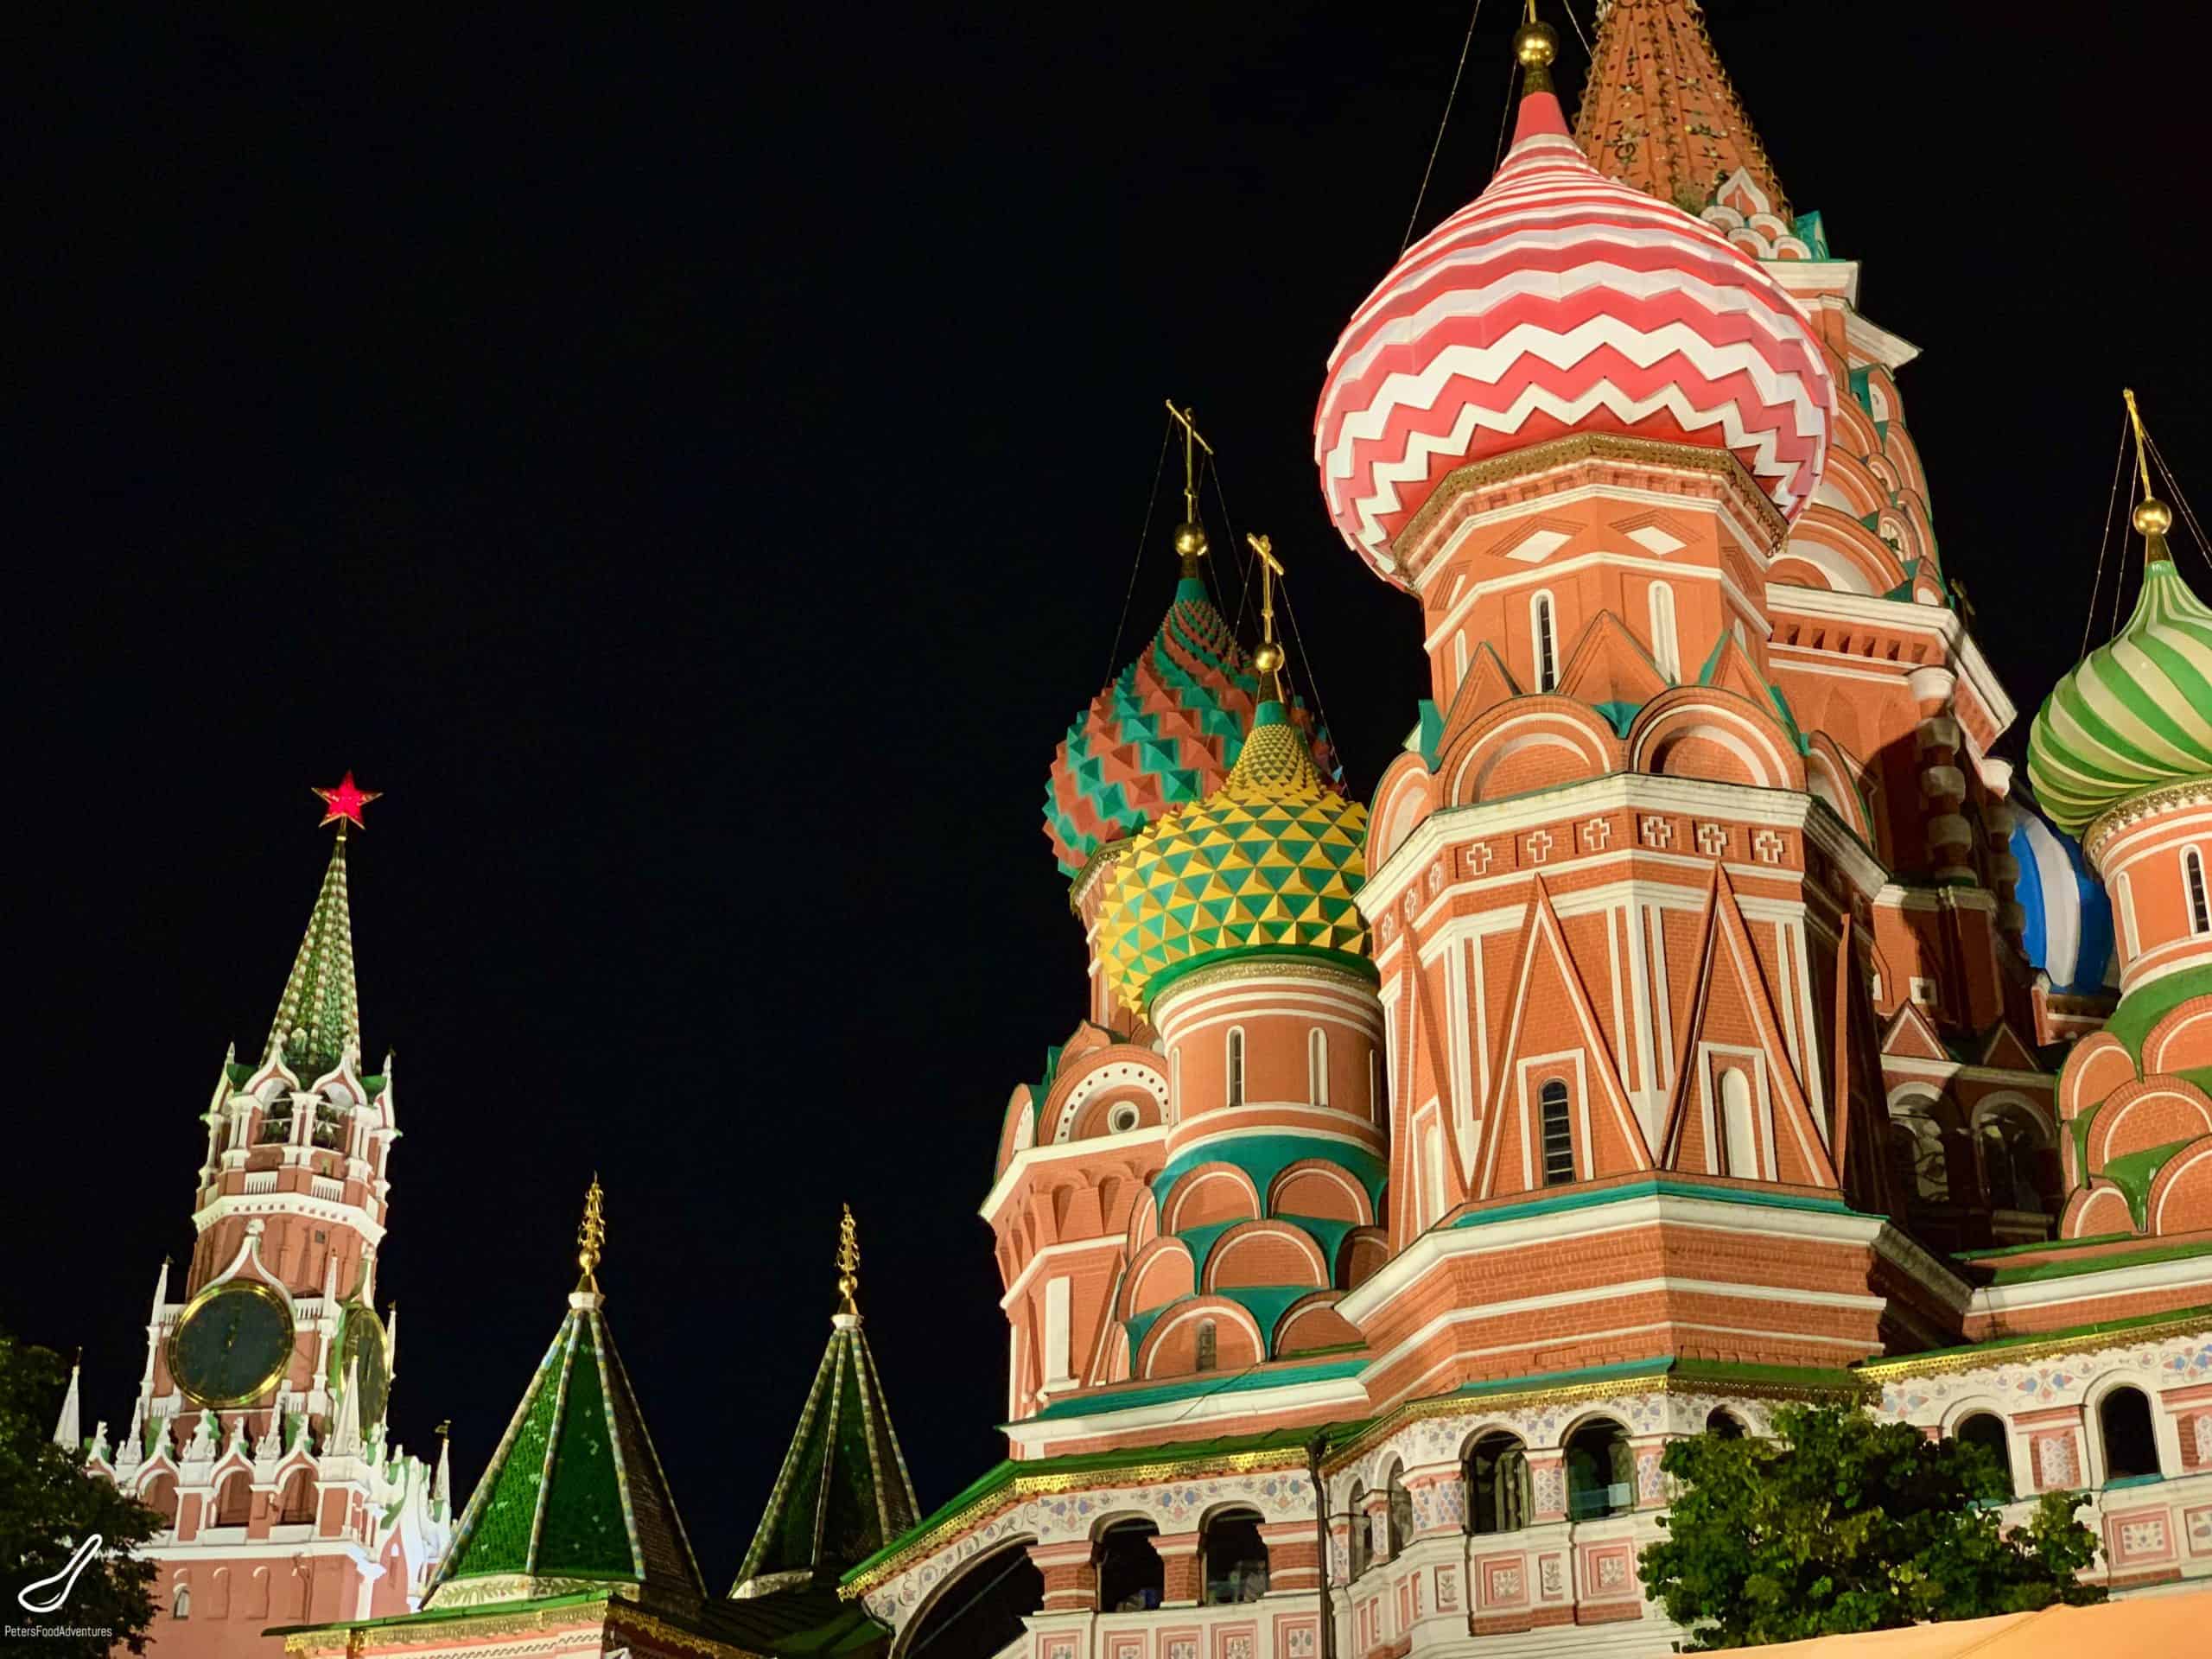 Moscow at night, St Basils and the Kremlin